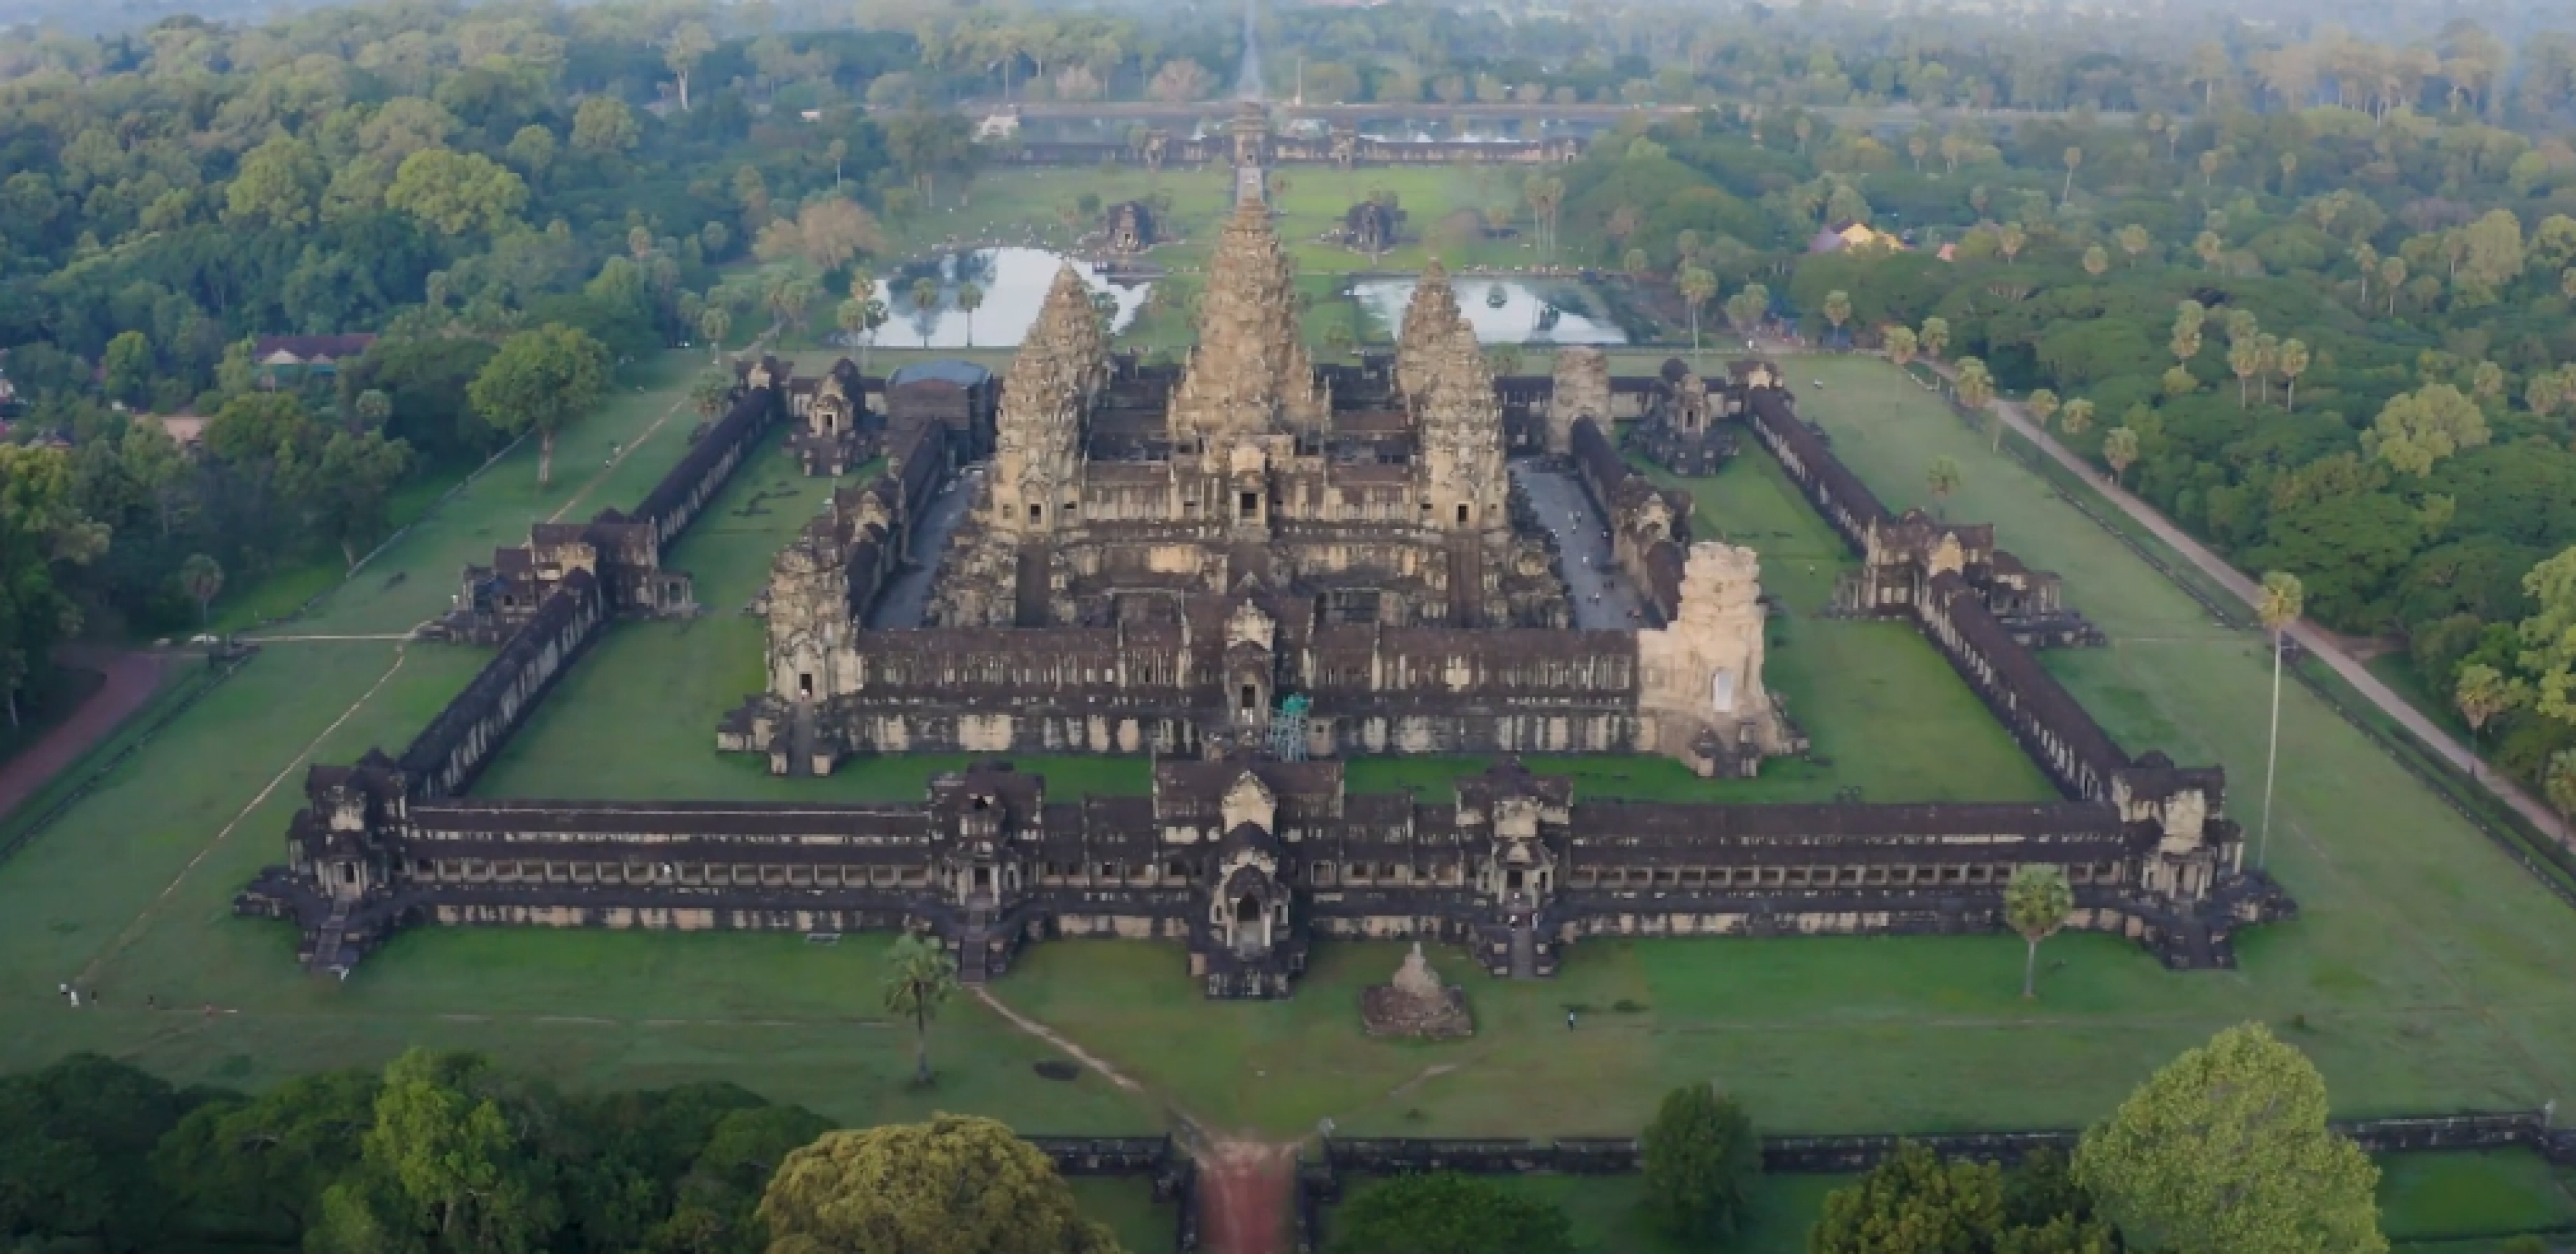 Aerial view of Angkor Wat